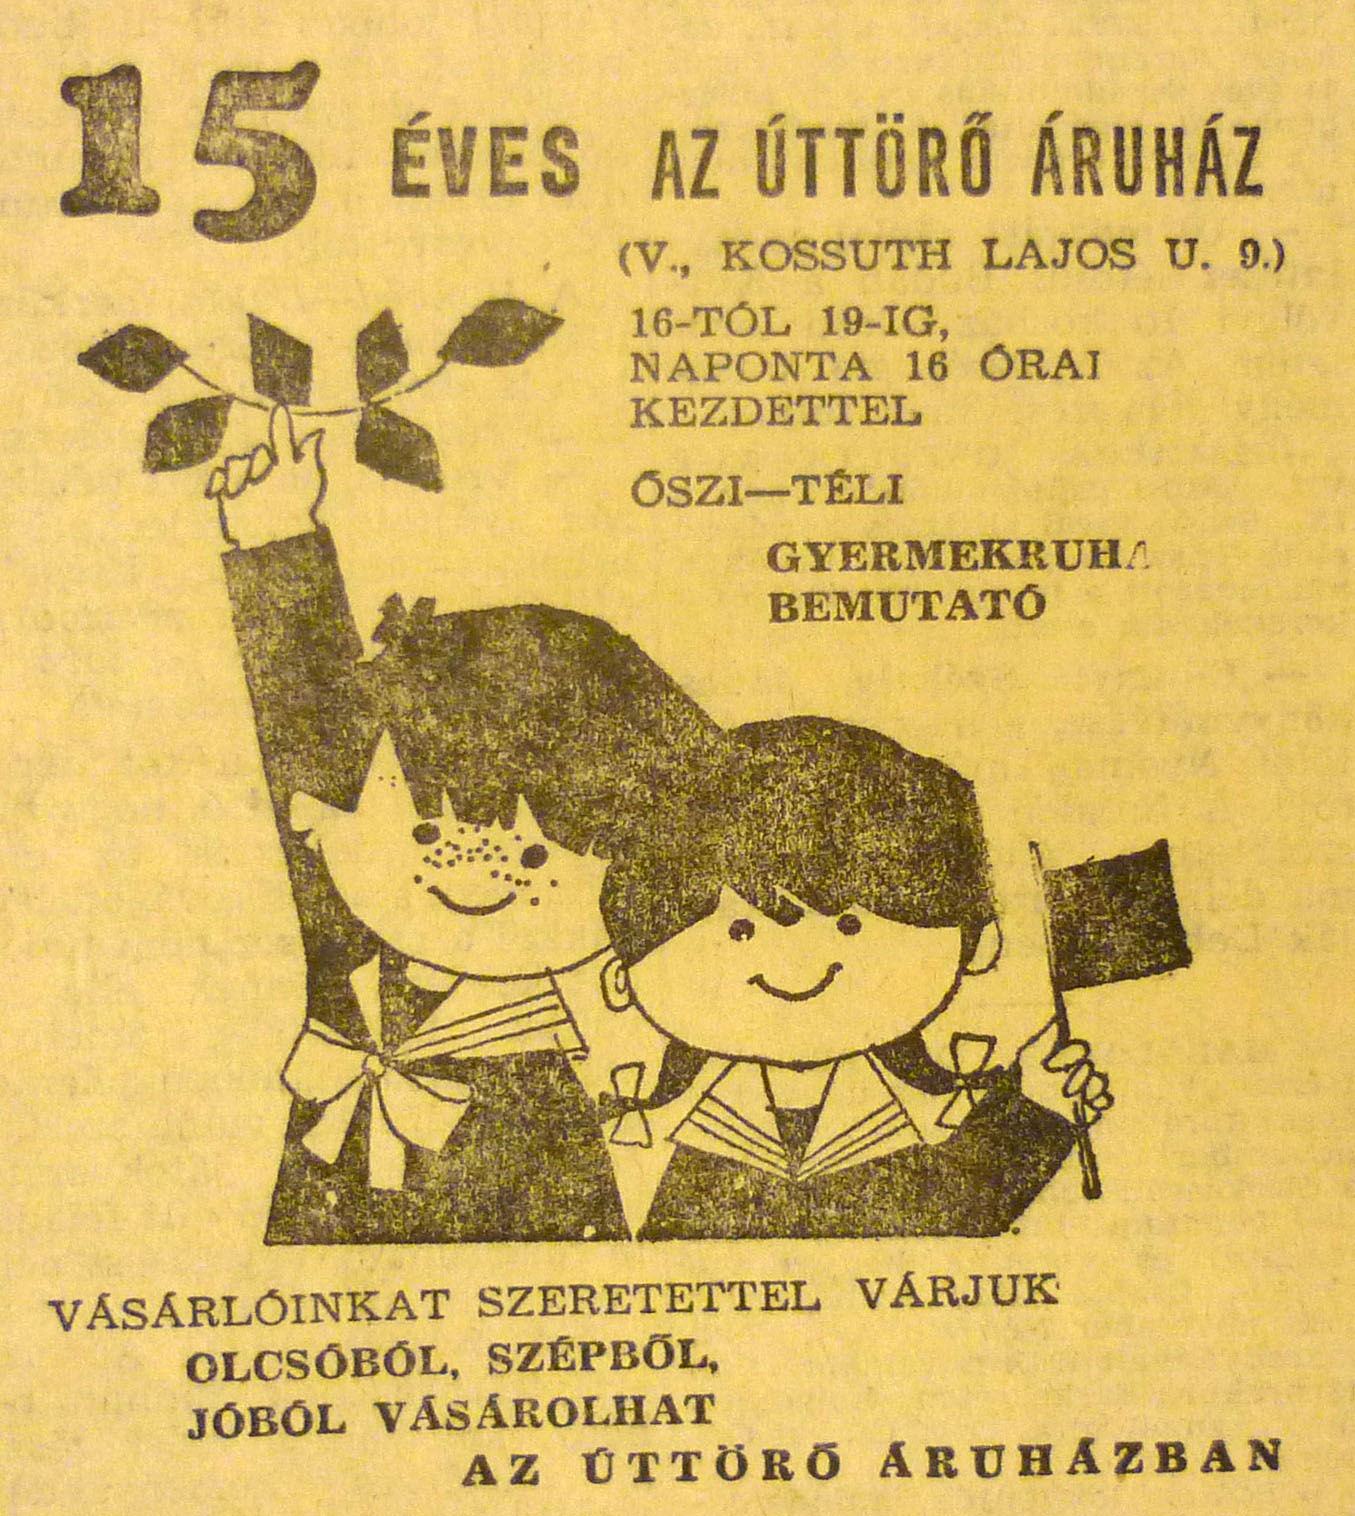 UttoroAruhaz-196511-MagyarNemzetHirdetes